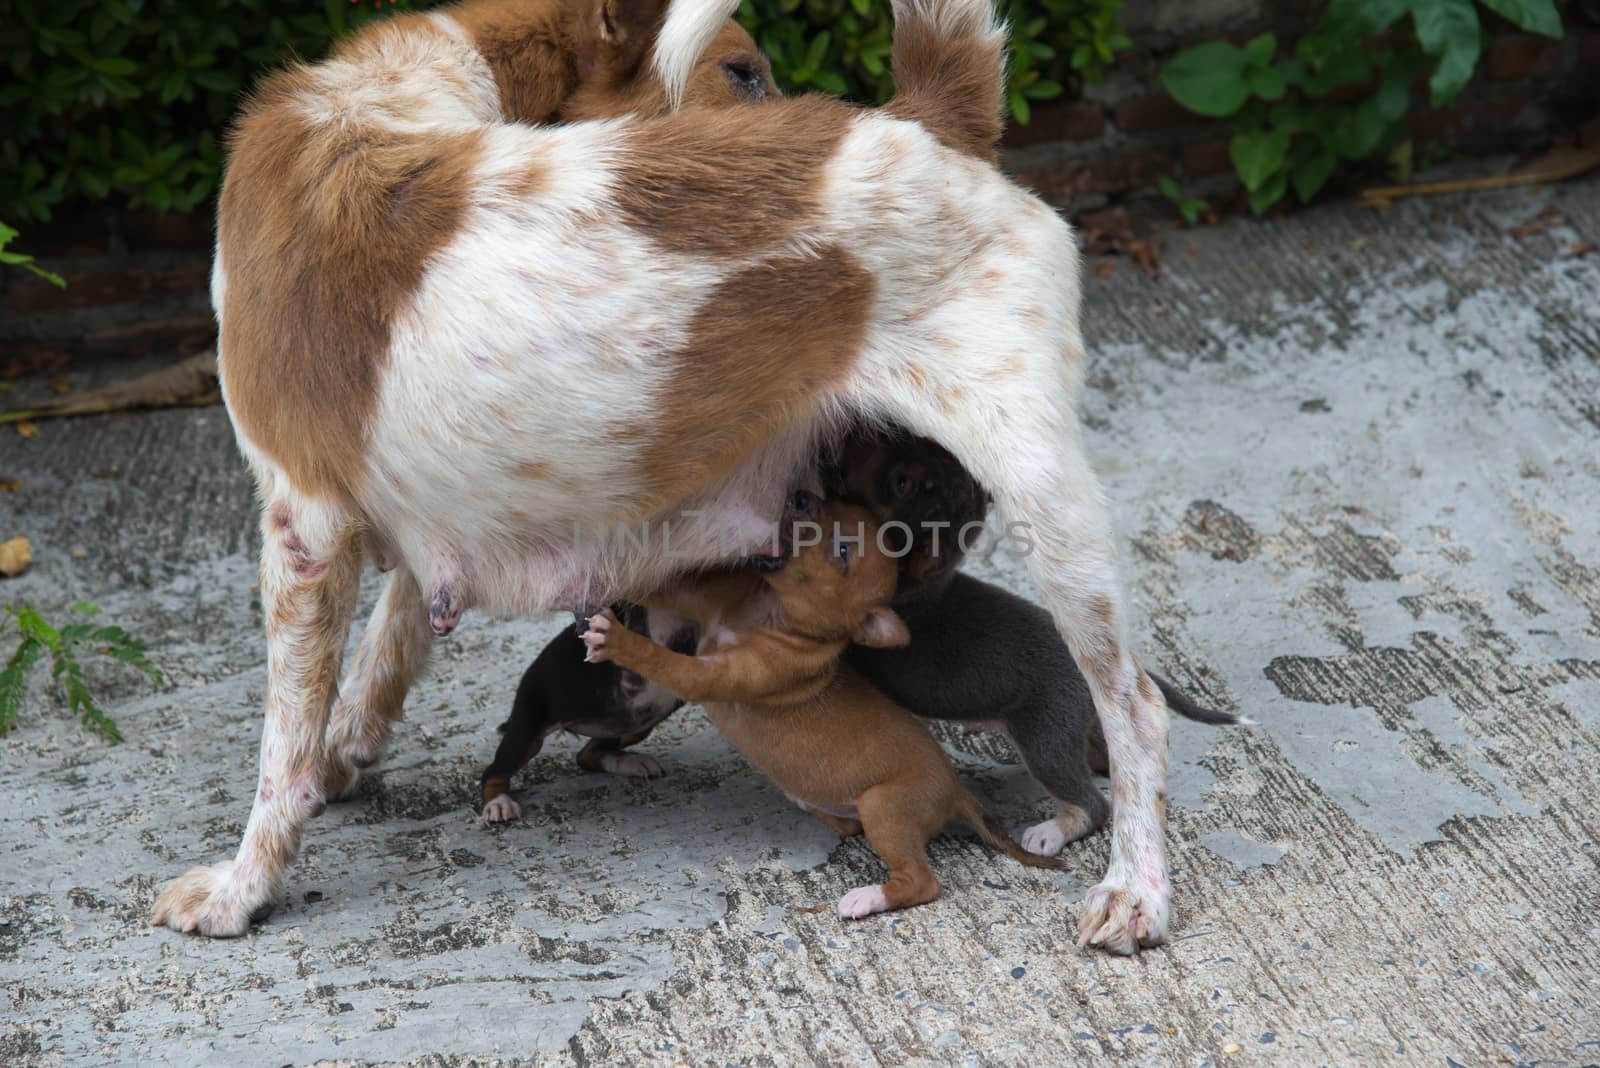 Newborn puppies dog sucking maternal milk by Soranop01